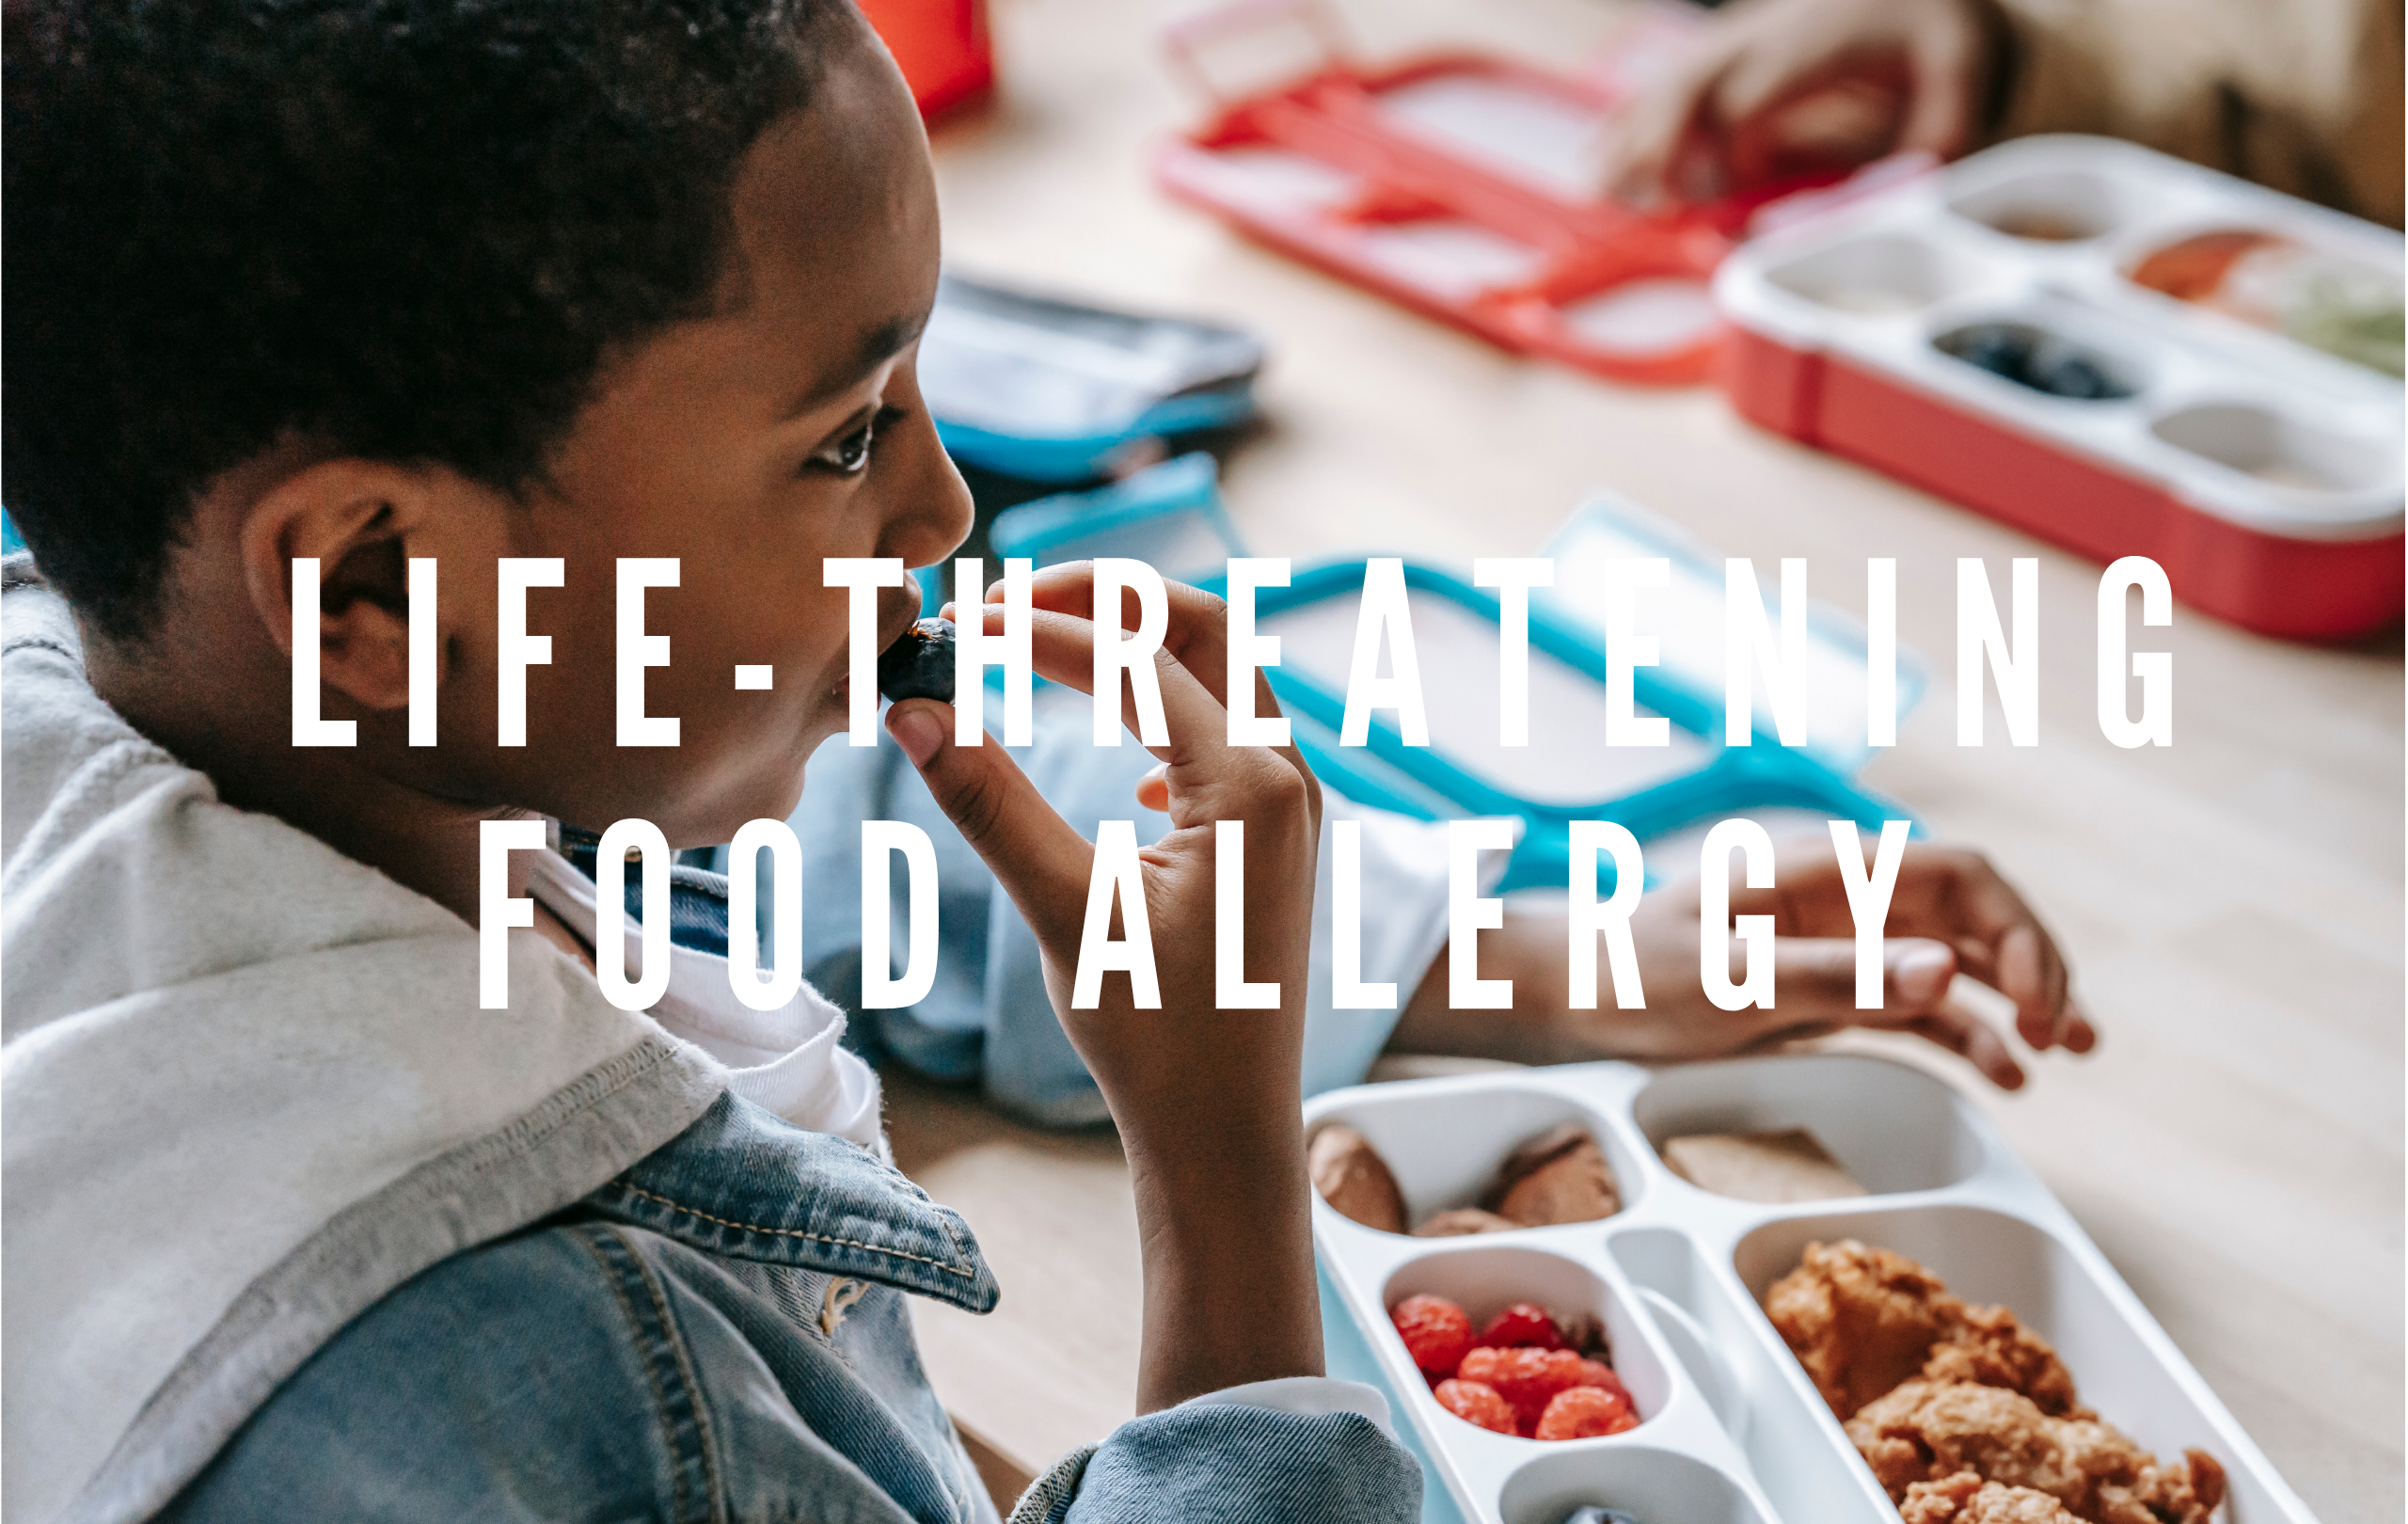 Life threatening food allergy information